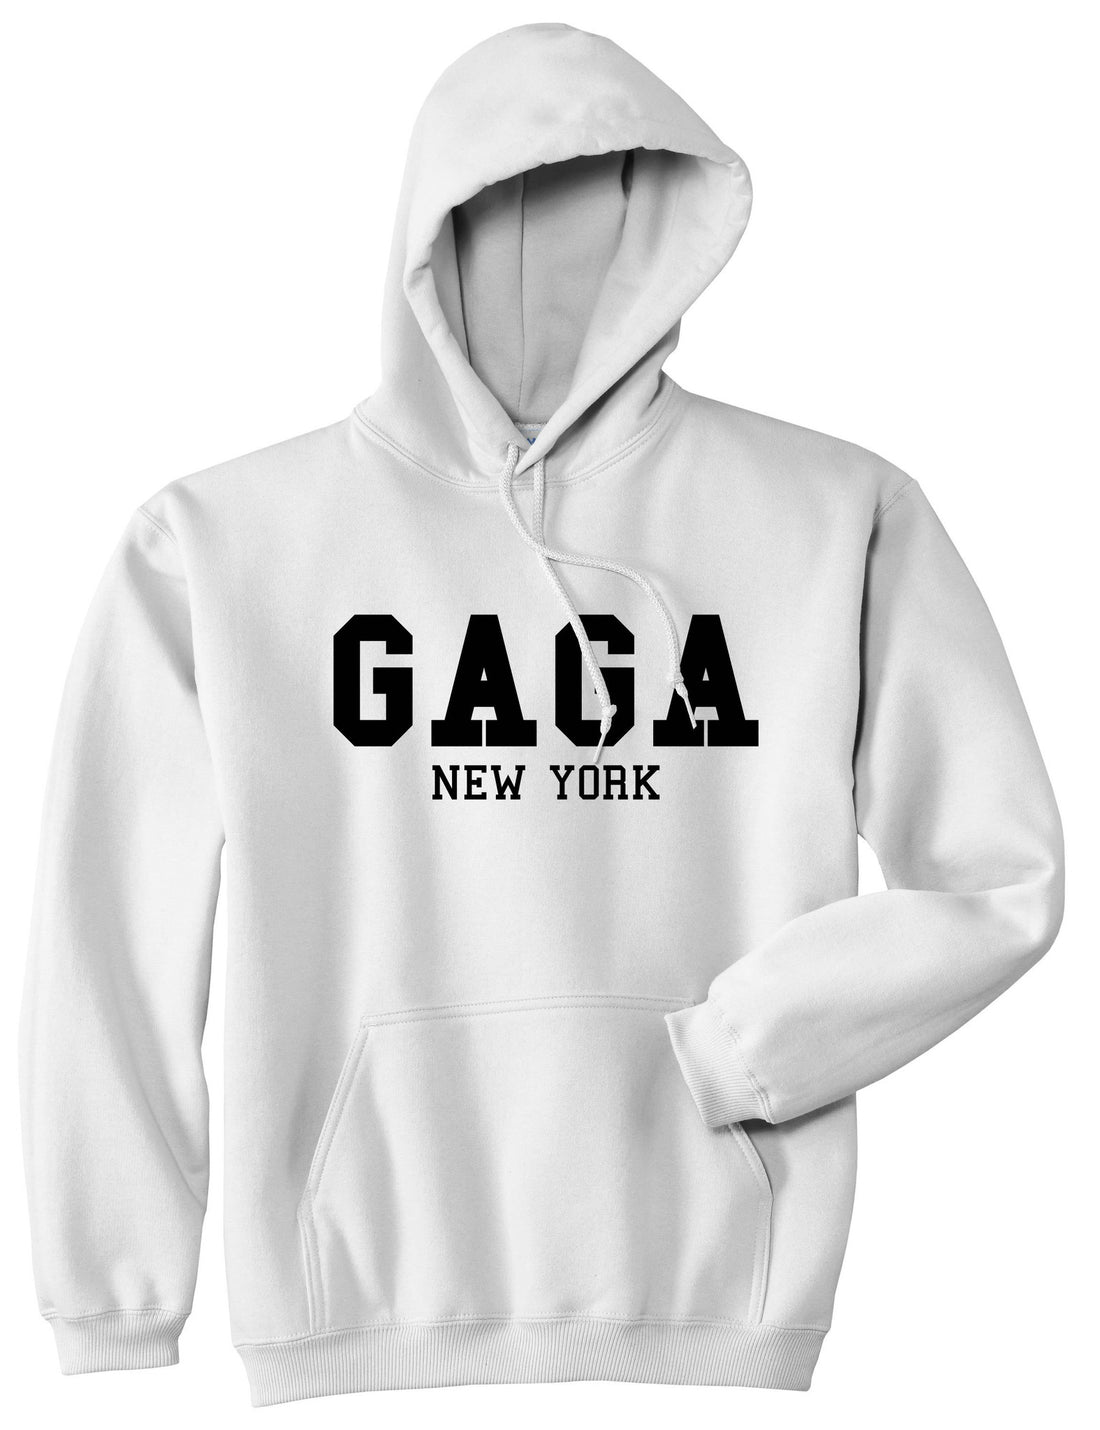 Gaga New York Pullover Hoodie Hoody in White by Kings Of NY